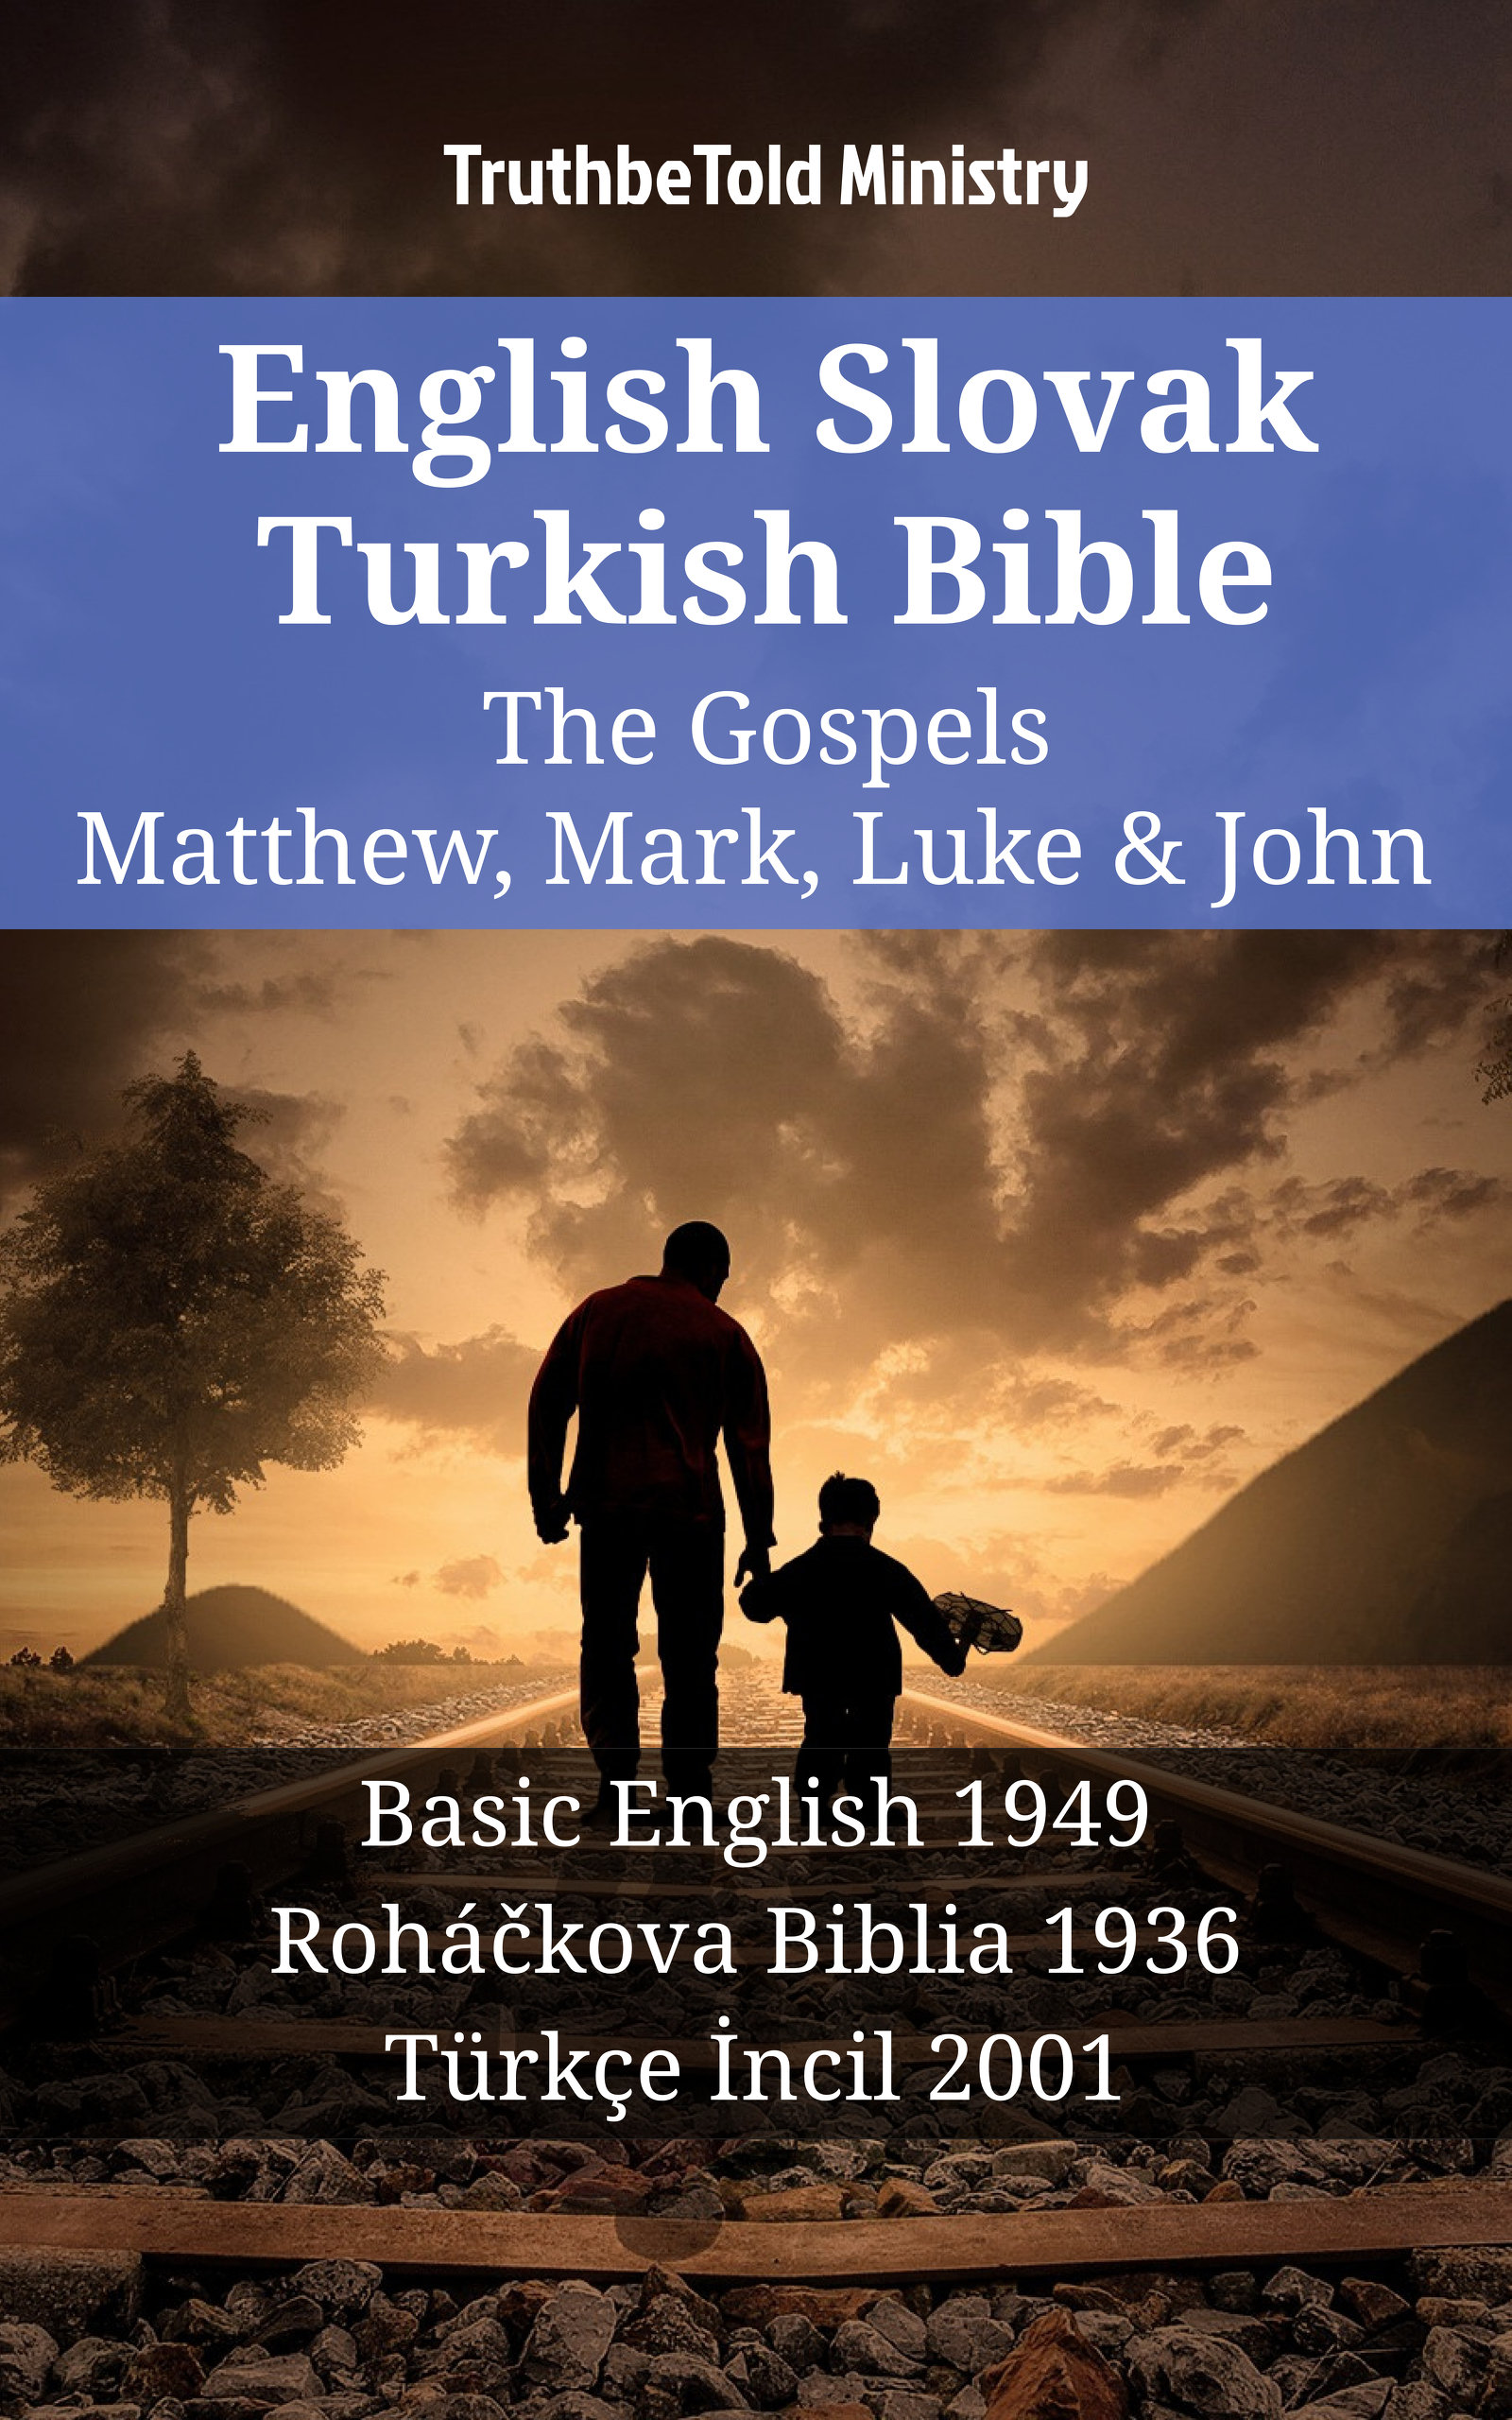 English Slovak Turkish Bible - The Gospels - Matthew, Mark, Luke & John